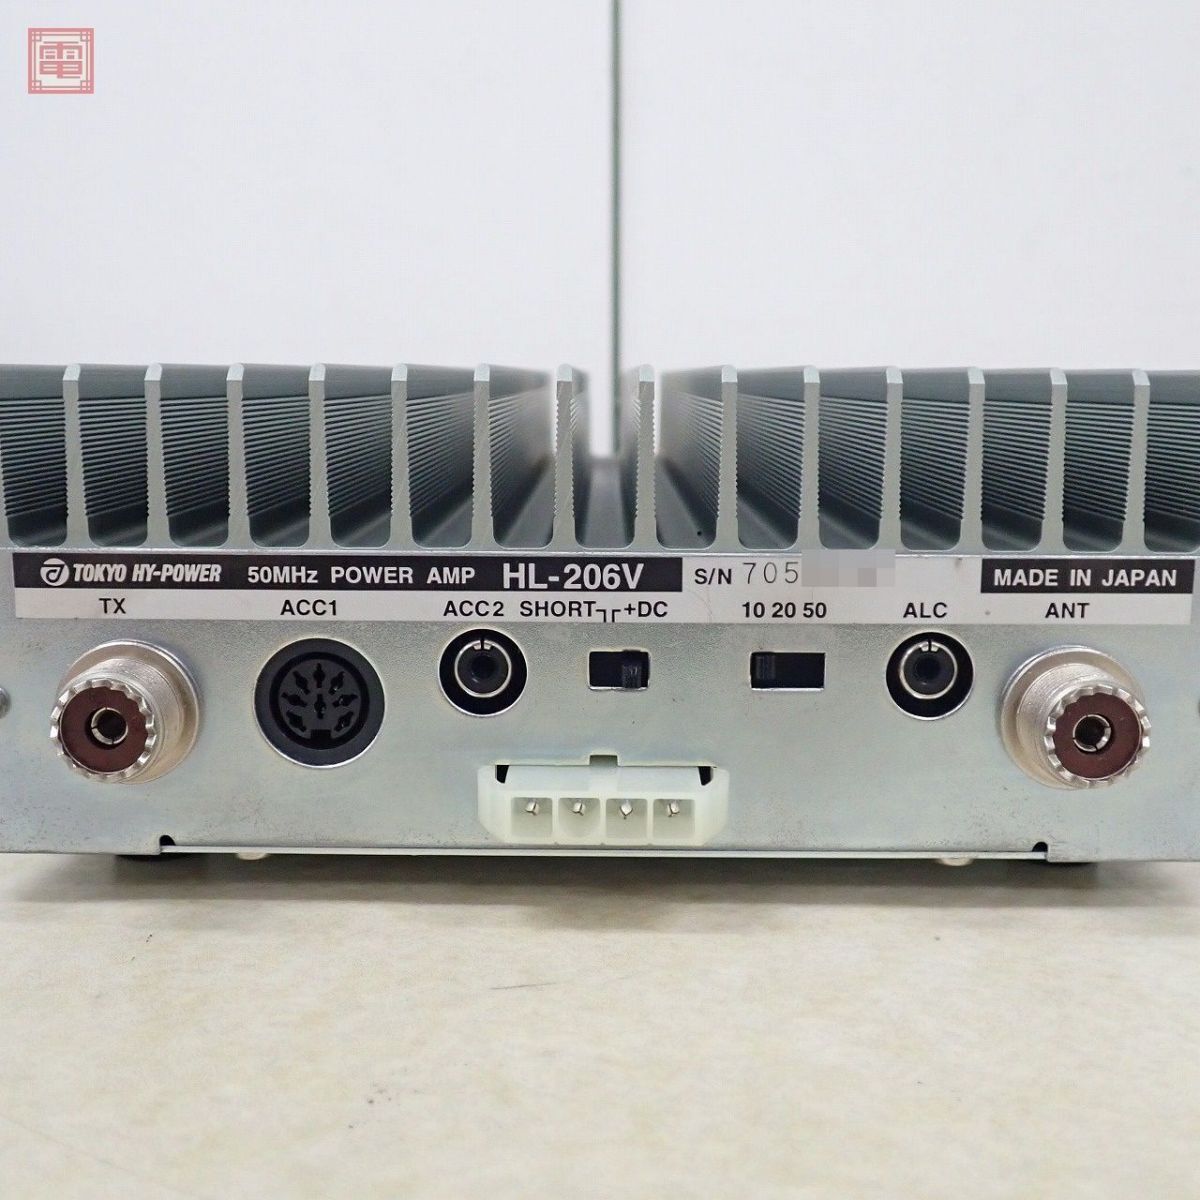  Tokyo high power HL-206V linear amplifier 50MHz 200W manual * original box attaching [20